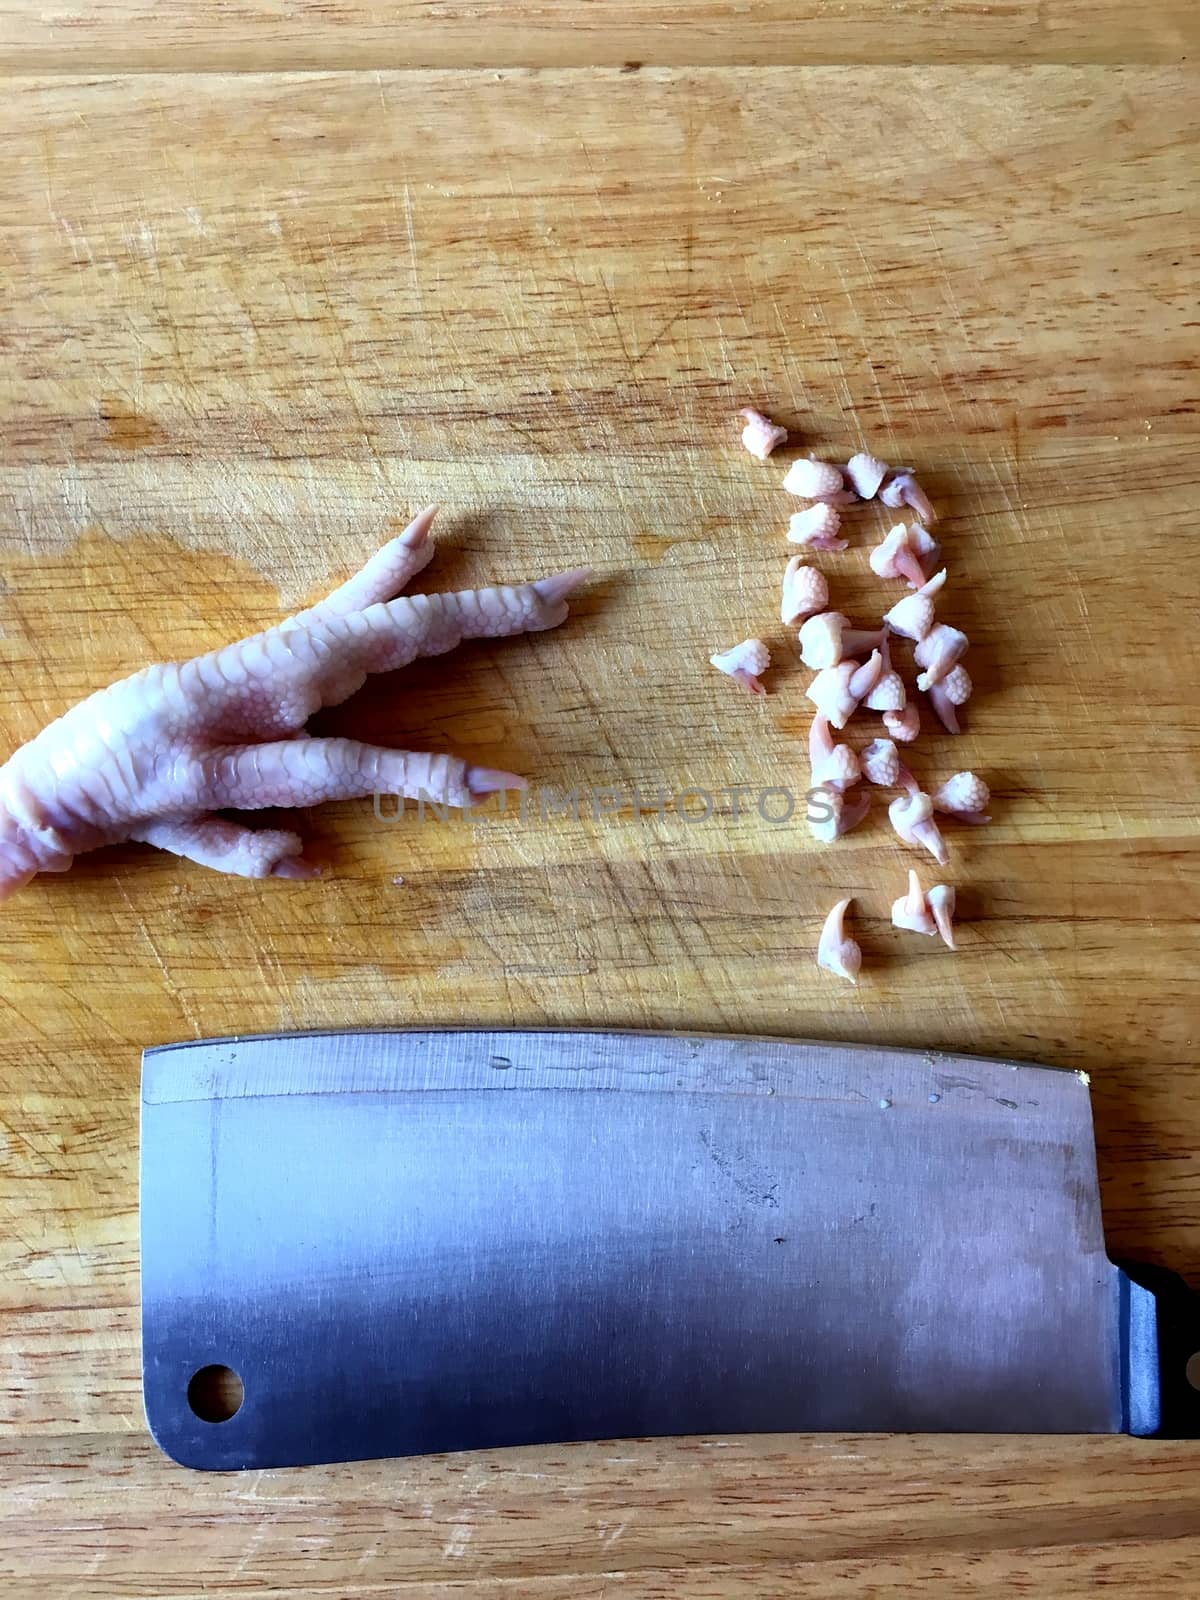 Chicken feet on cutting board with toenails cut off.